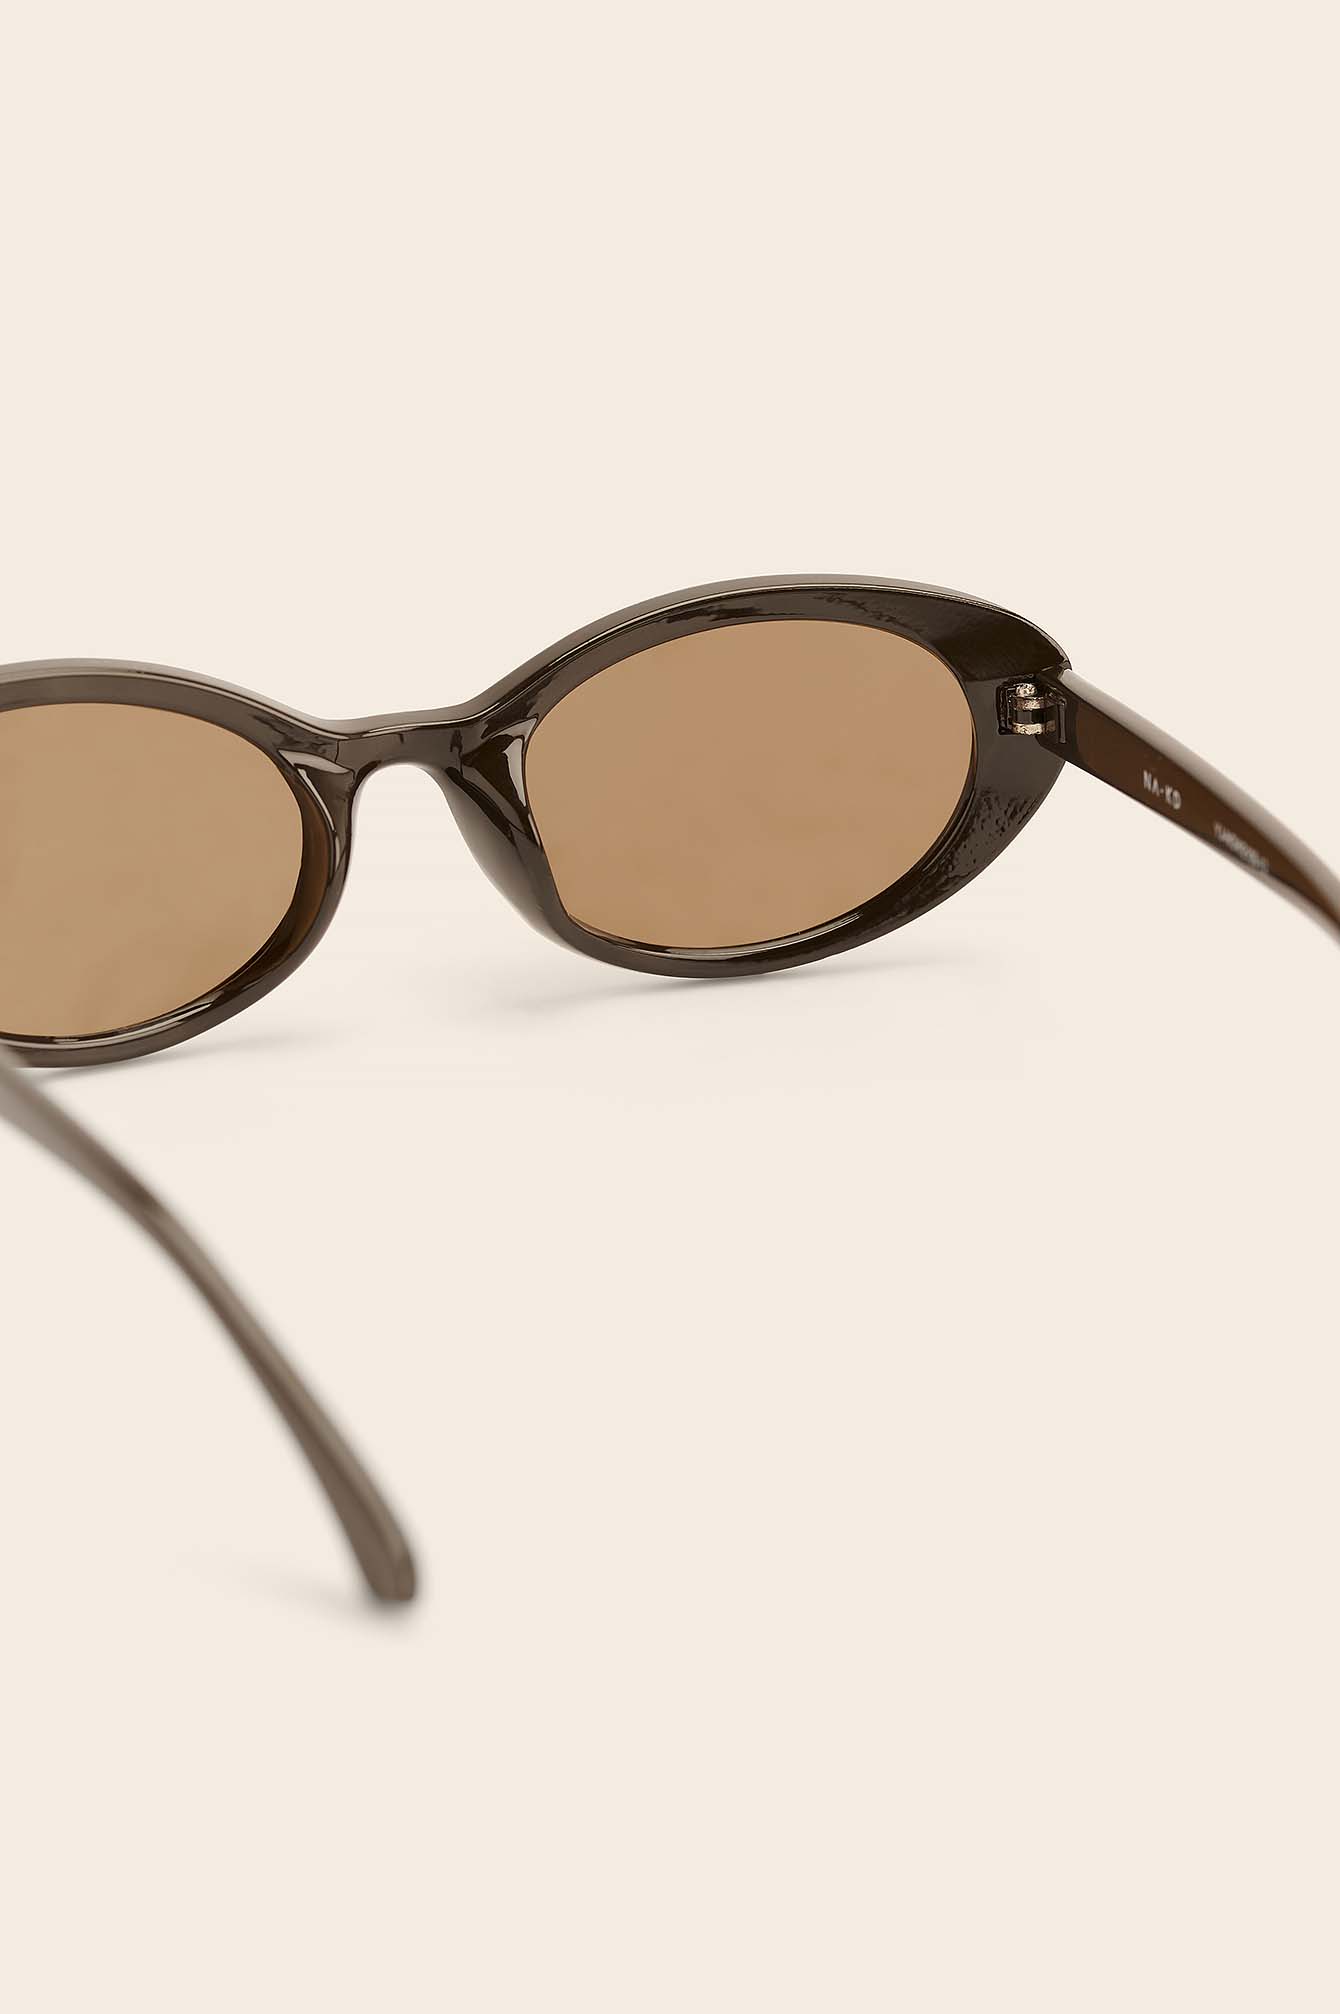 New Fashion Cat eye designer sunglasses 7150 Brown frame/Brown Polarized lens 